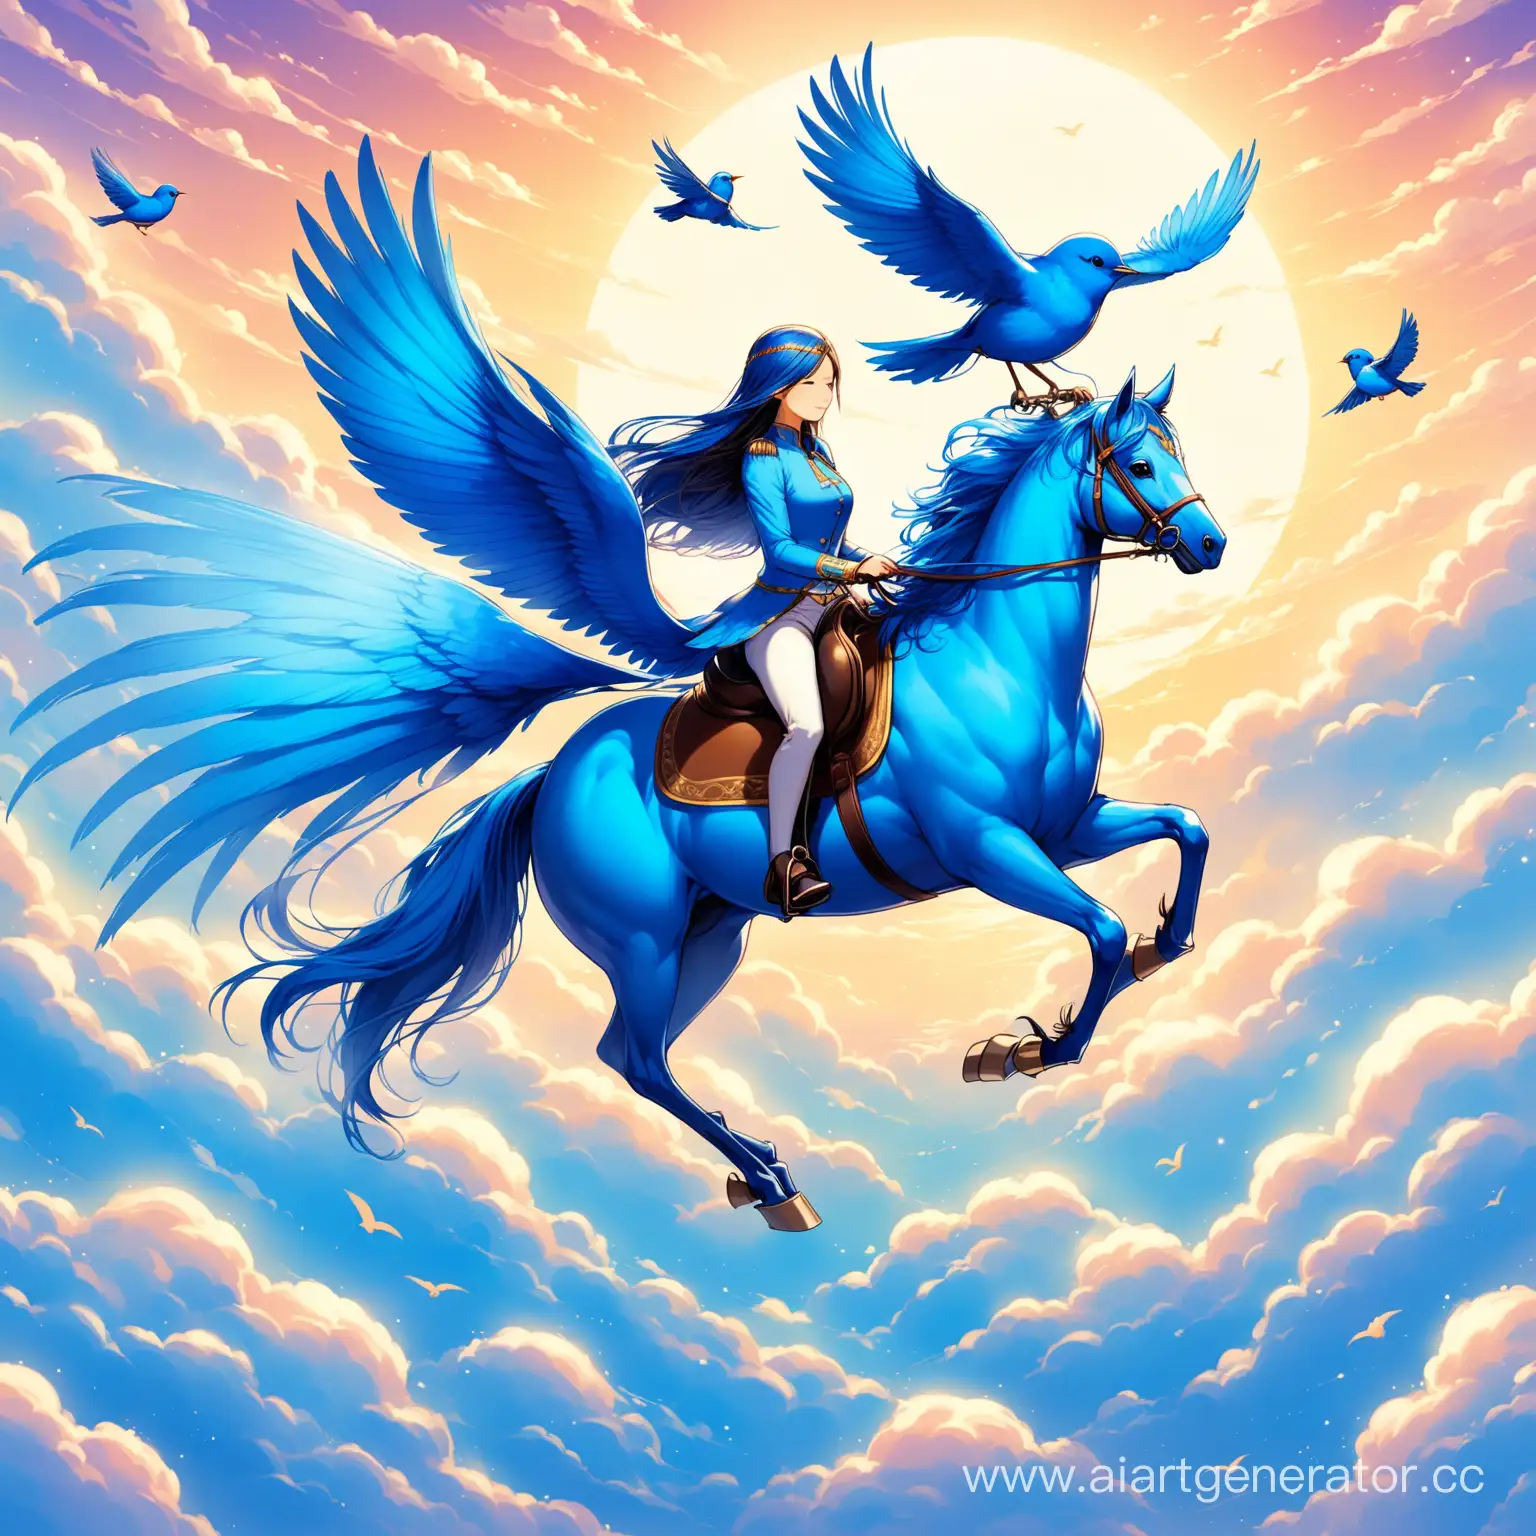 Dreamy-Encounter-Blue-Bird-on-Horseback